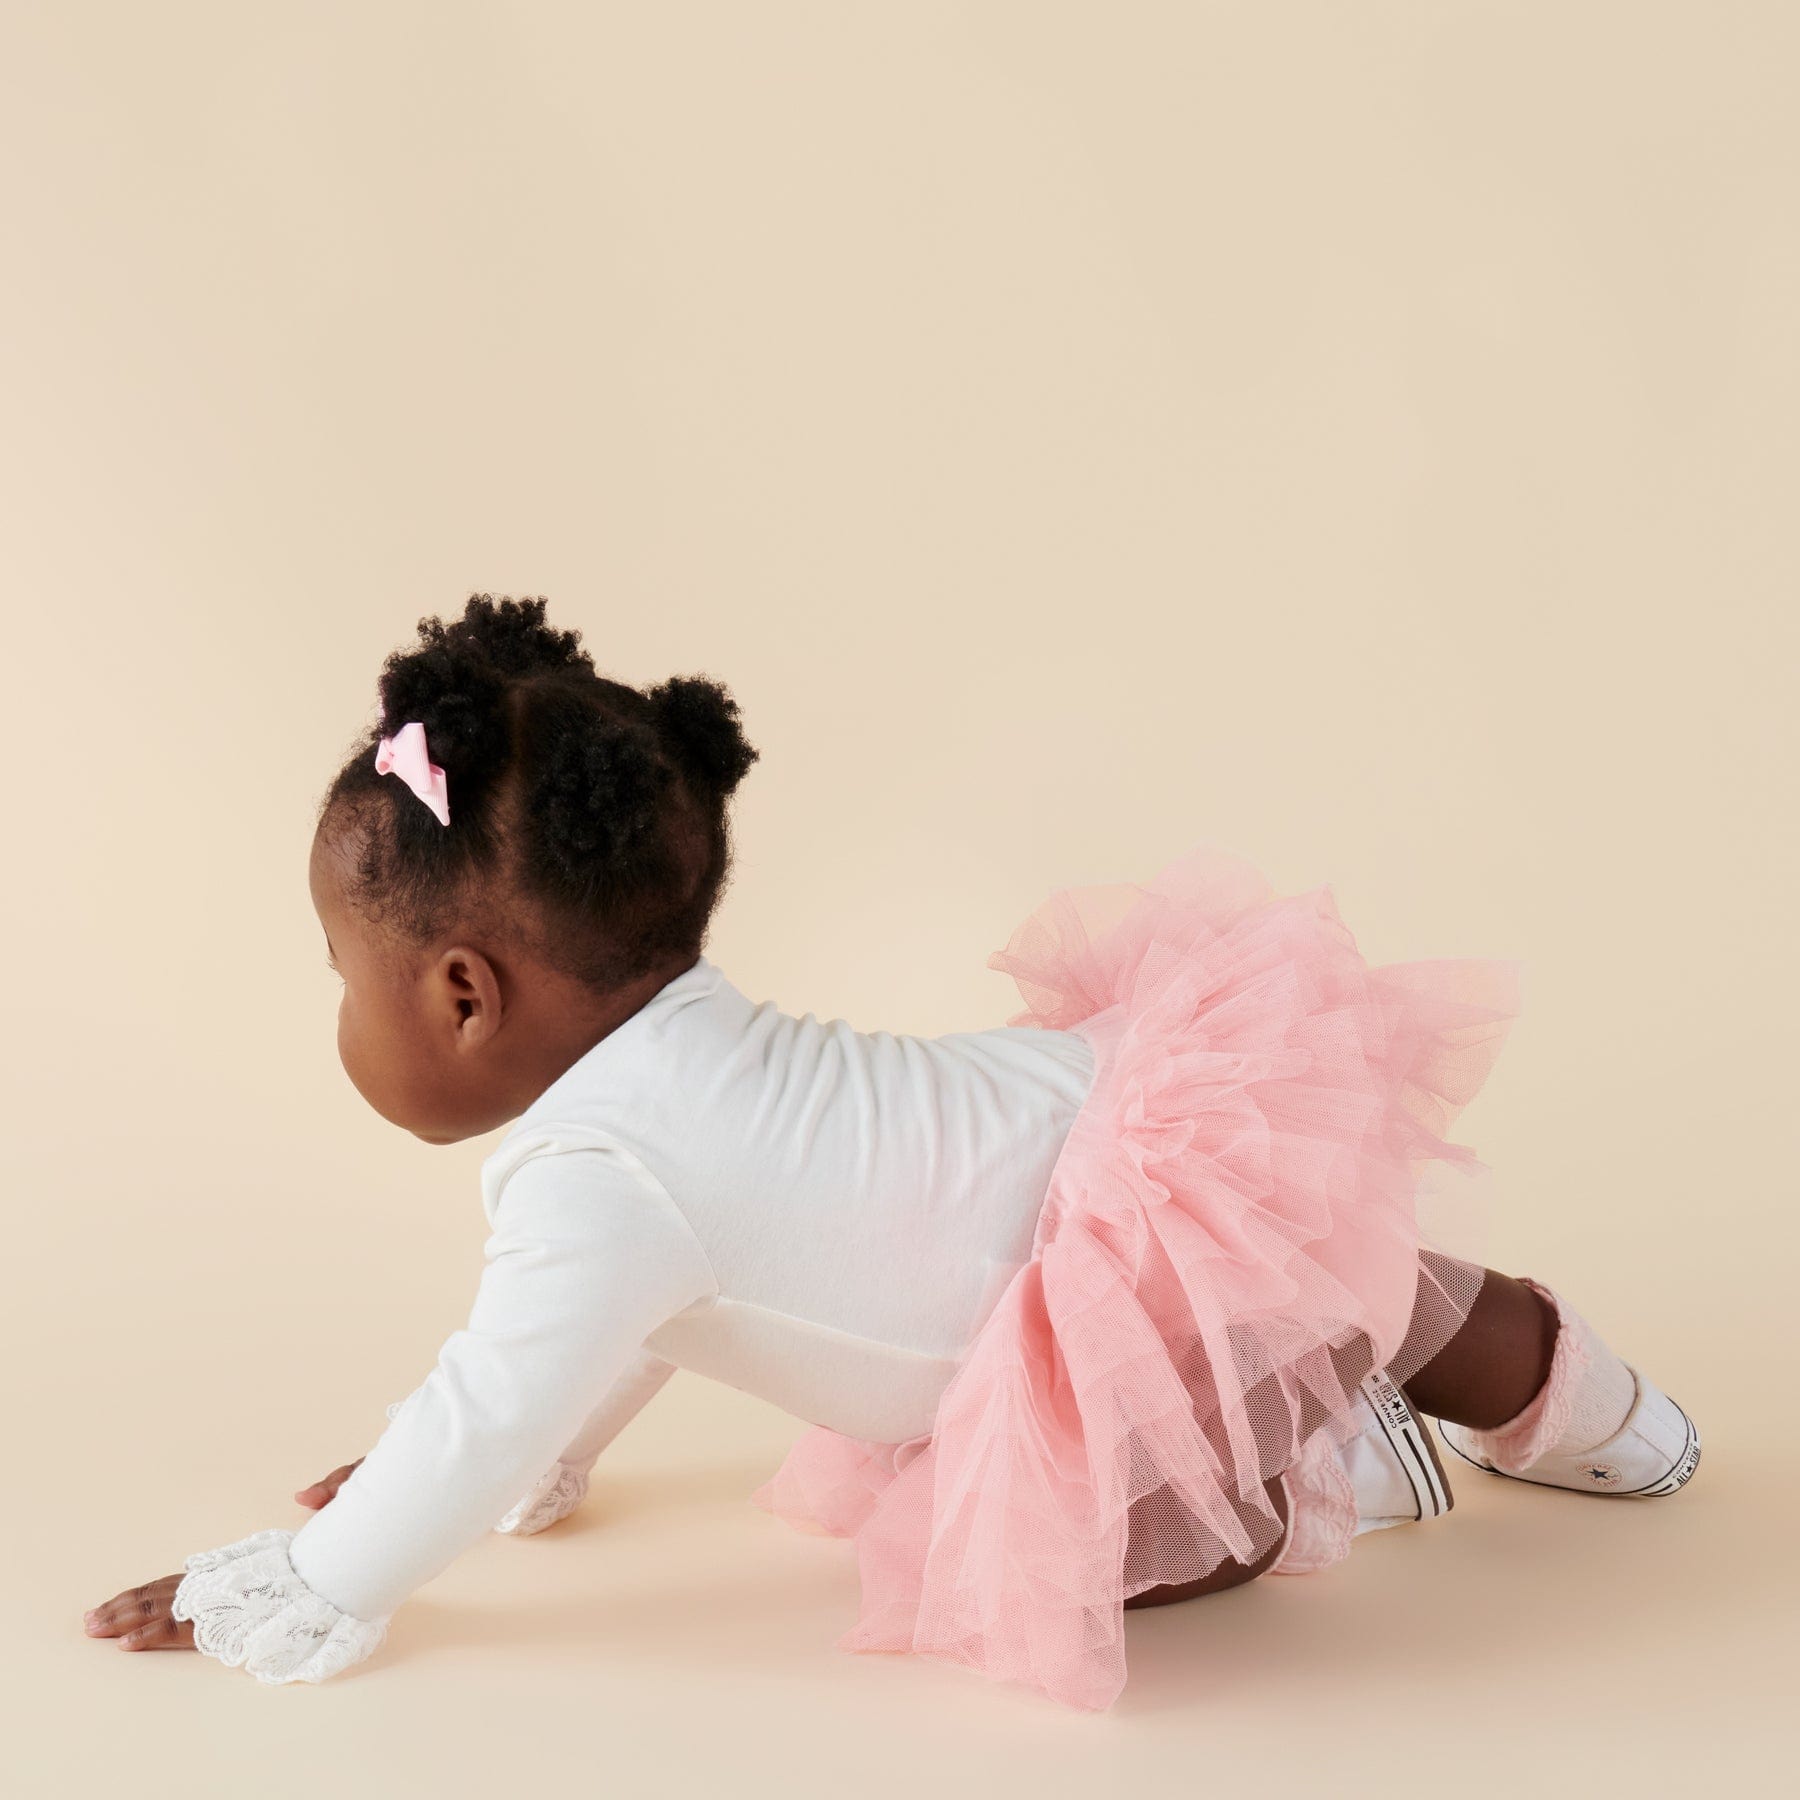 Designer Kidz Girls Bottoms Bunny Floral Baby Tutu Bloomers - Soft Pink